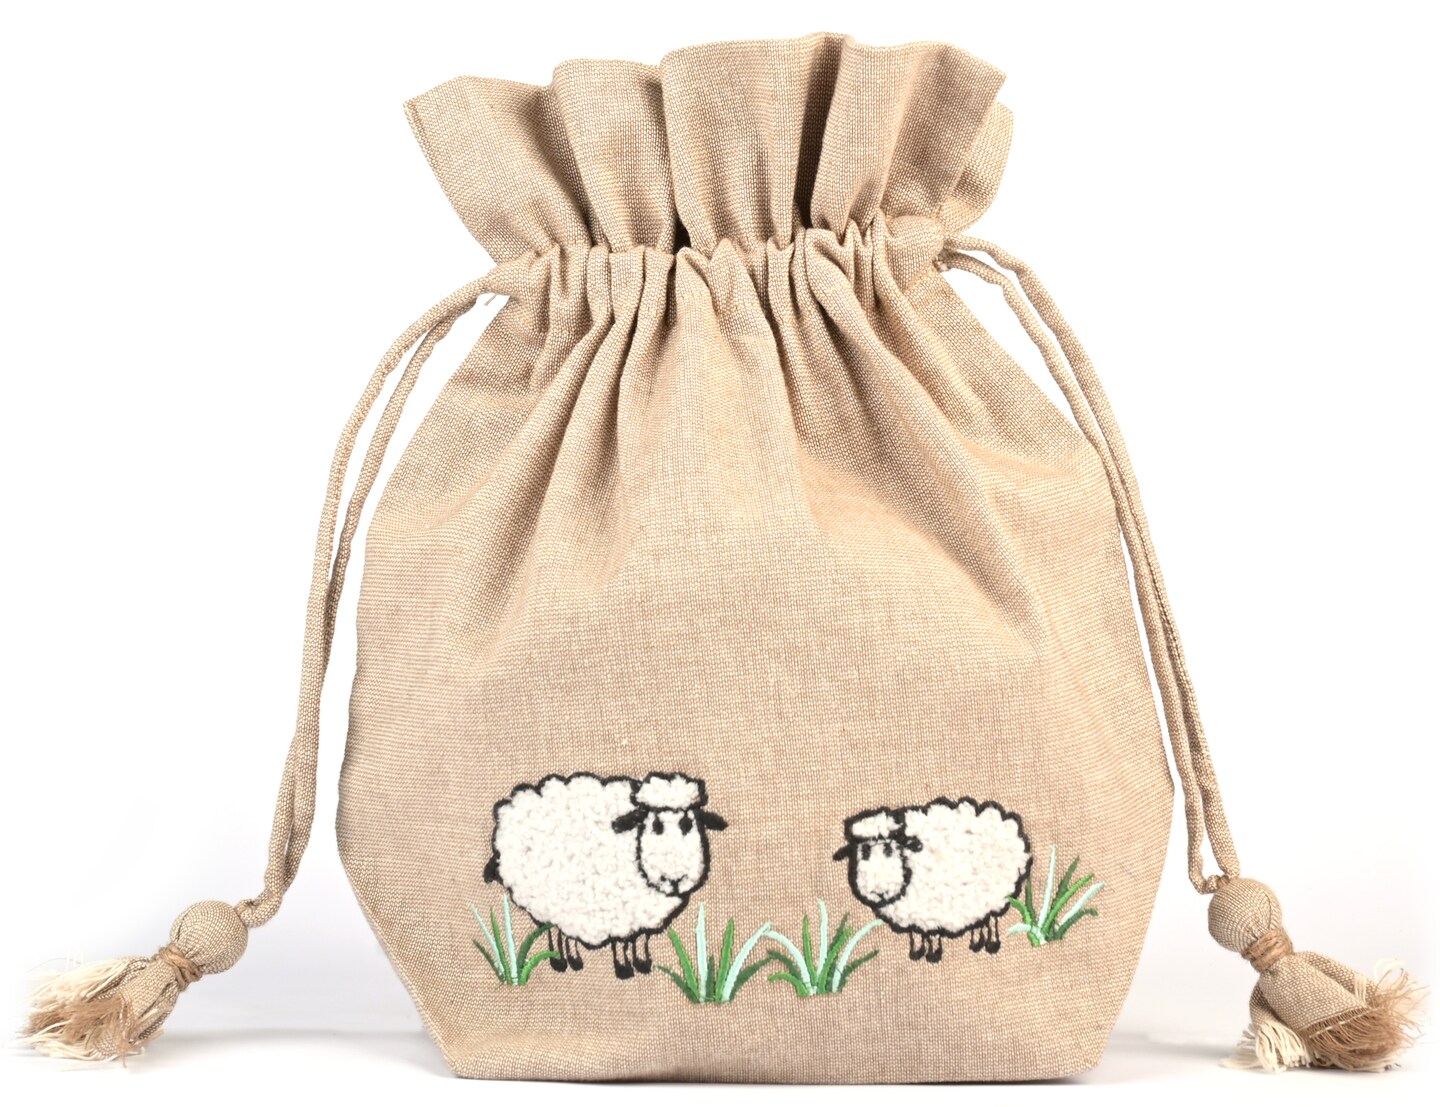 Lantern Moon Meadow Bag, White Sheep